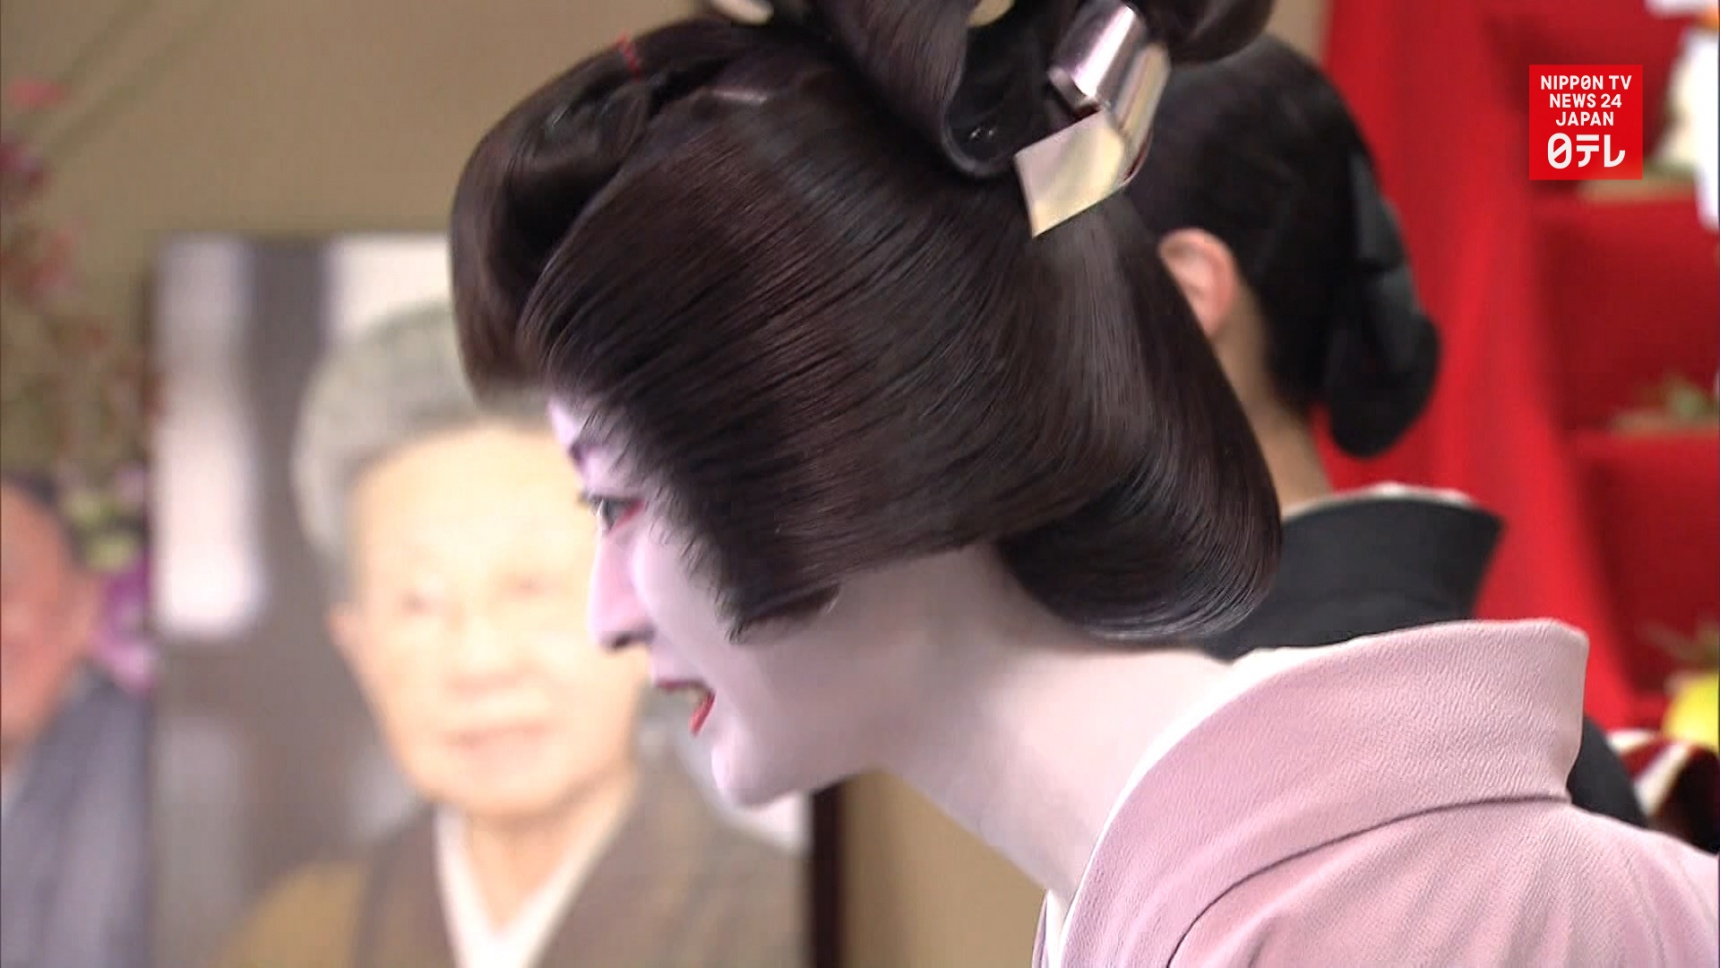 Geisha in Kyoto Prepare for New Year